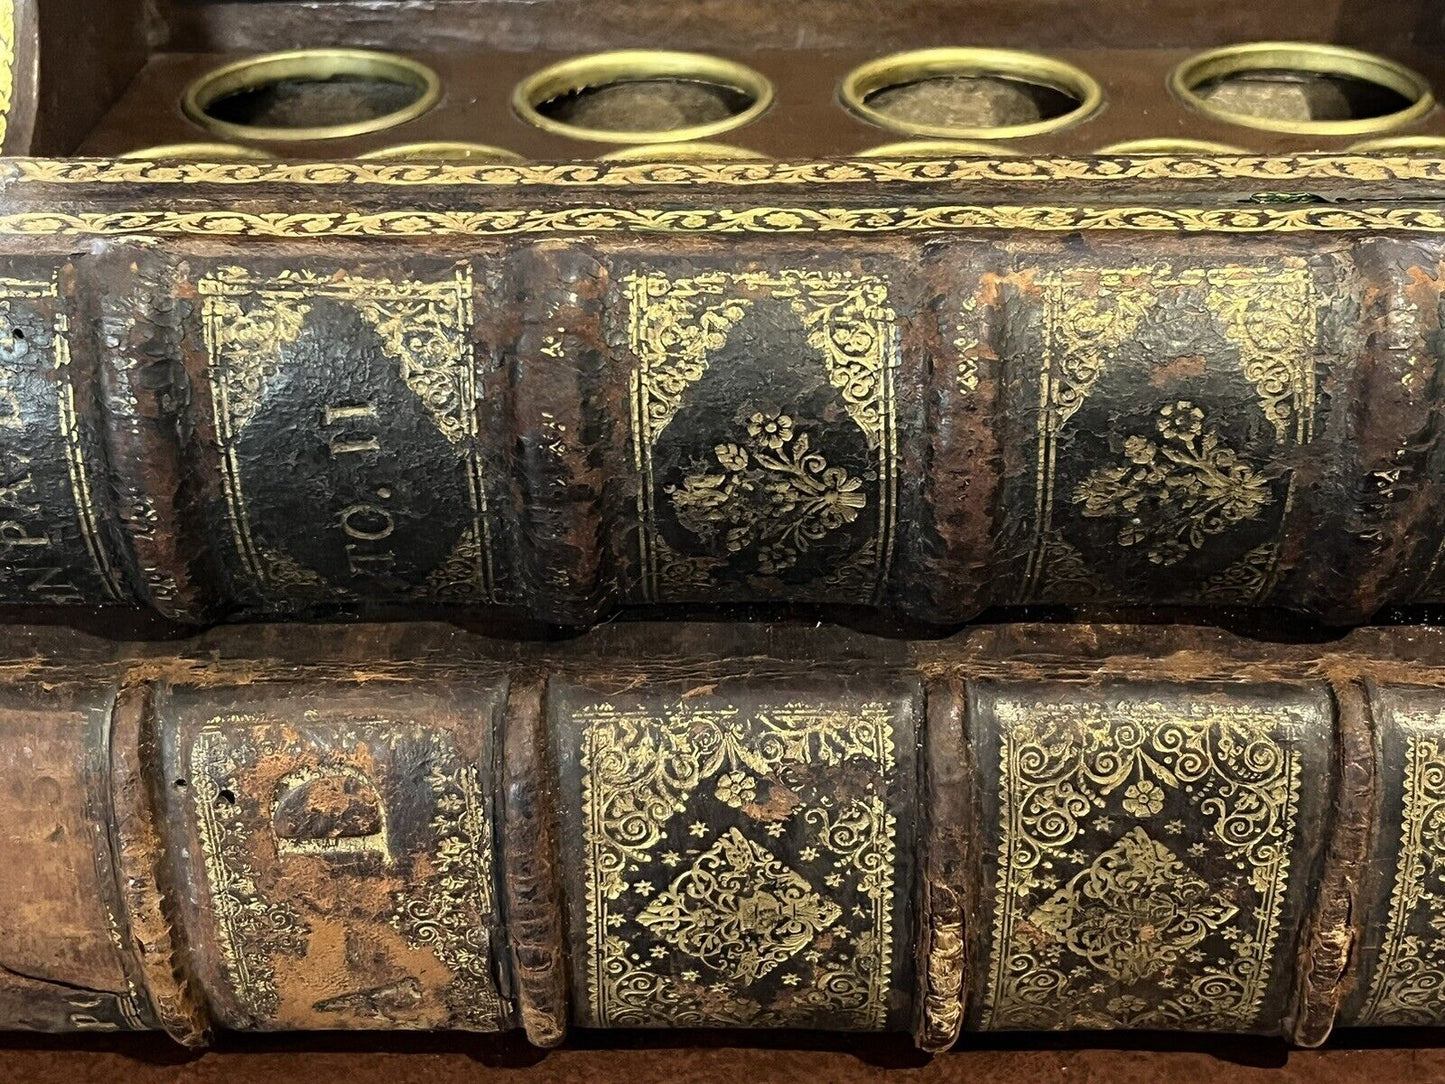 Antique Secret Hidden Tantalus. Antique Books With Pull Out Tantalus